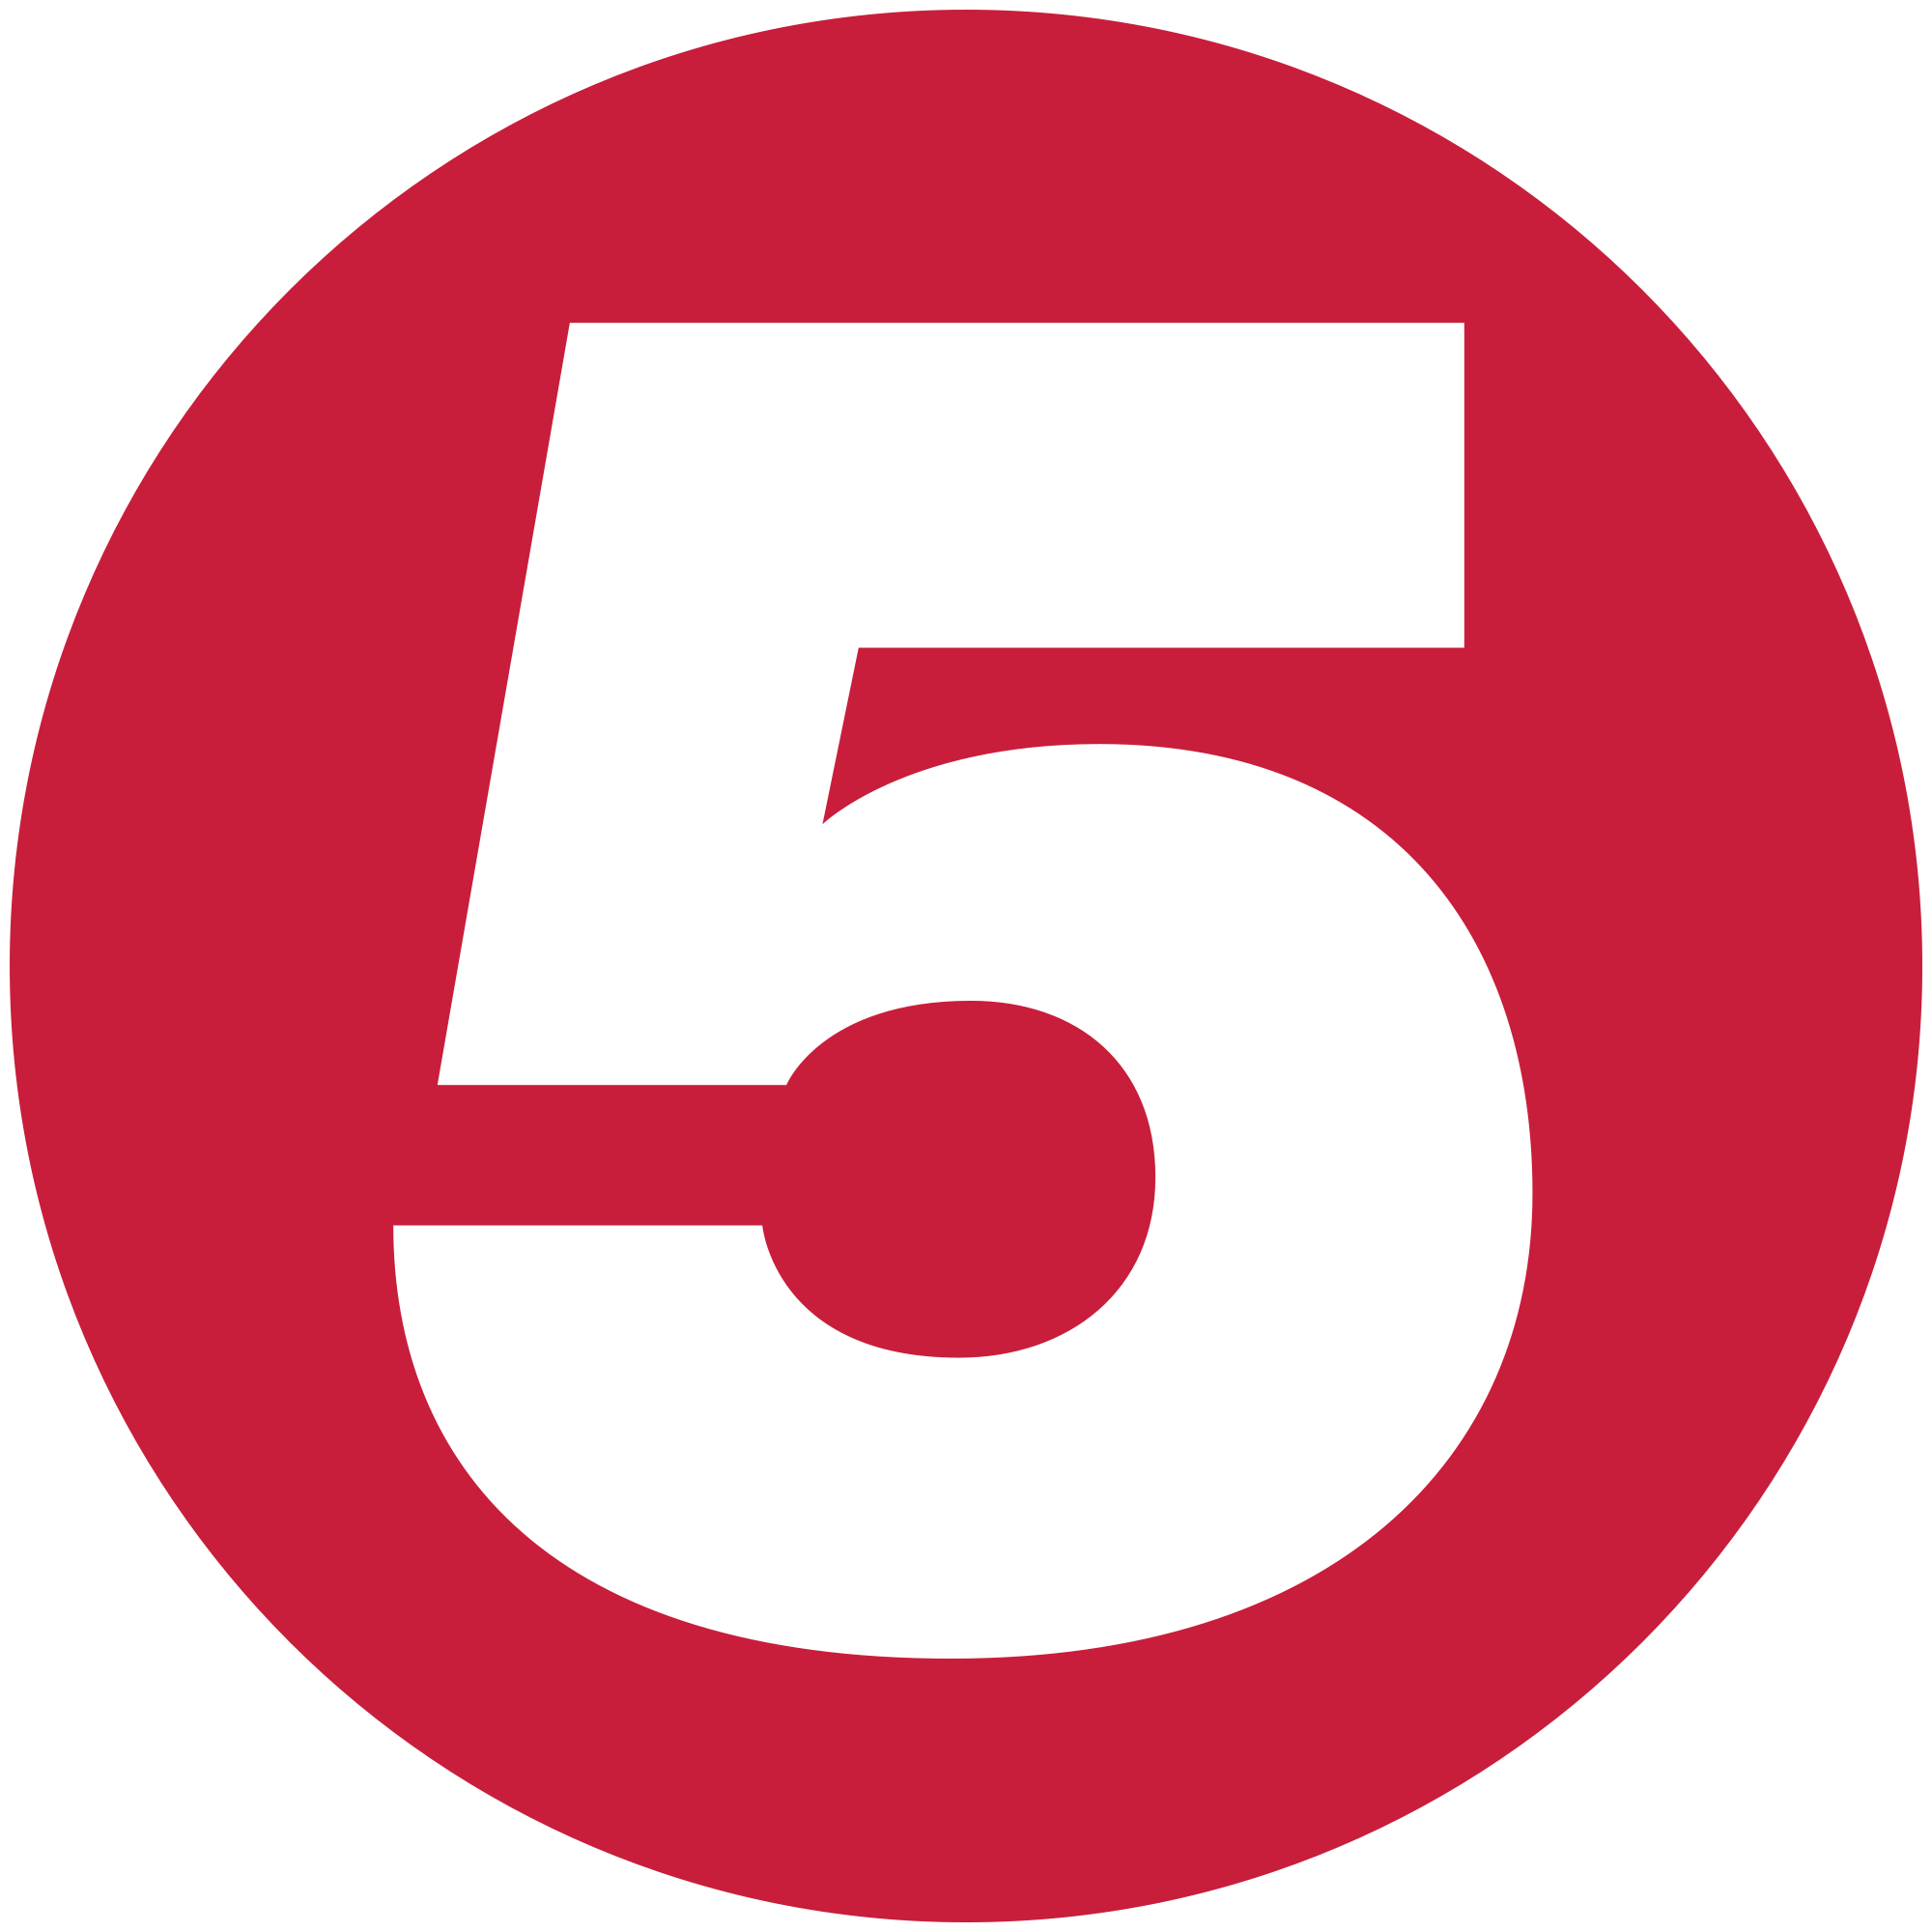 Channel 5 Logo - File:Channel 5 logo 2011.svg - Wikimedia Commons